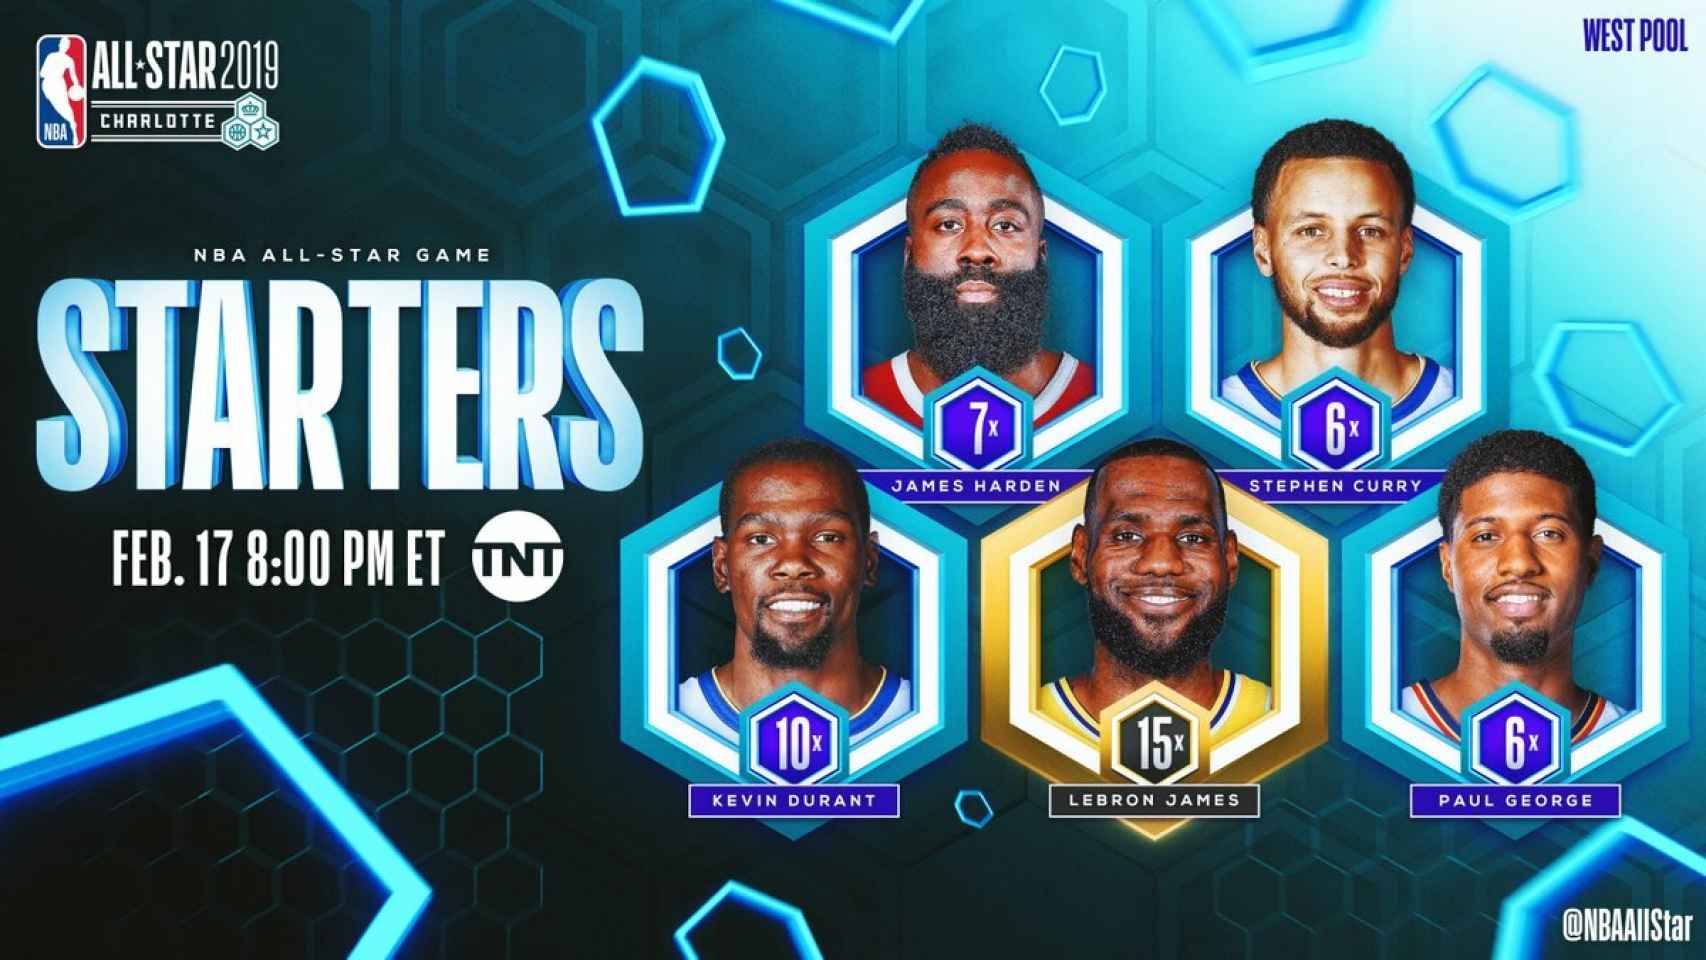 Quinteto titular del Oeste en el All Star 2019 de la NBA